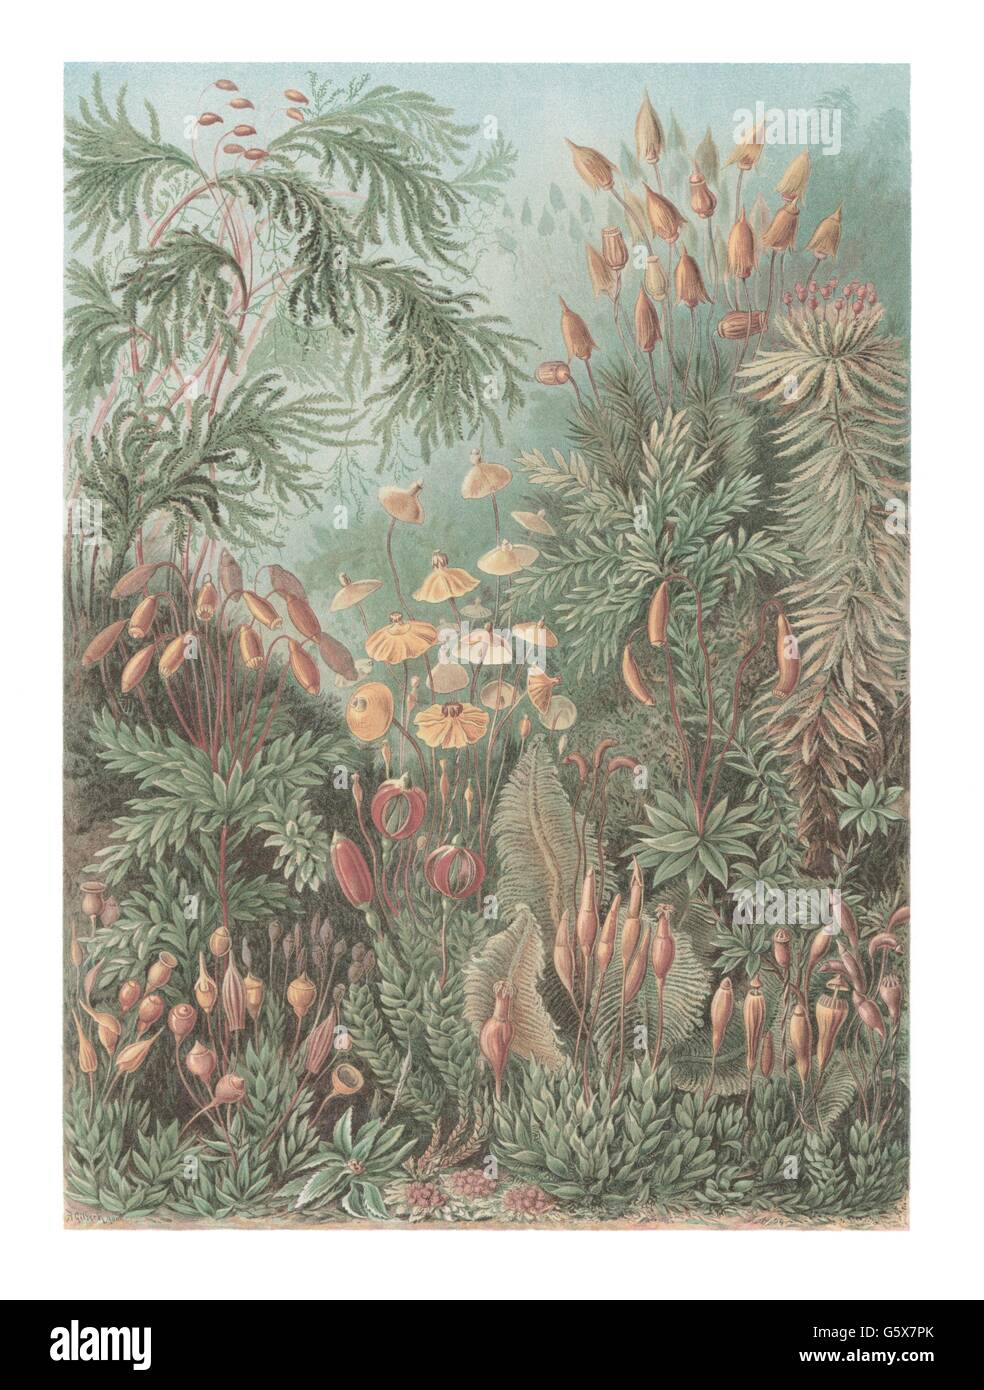 botanik, Moose, bryophyta, Farblithographie, aus: Ernst Haeckel, 'Kunstformen der Natur', Leipzig - Wien, 1899 - 1904, Additional-Rights-Clearences-not available Stockfoto